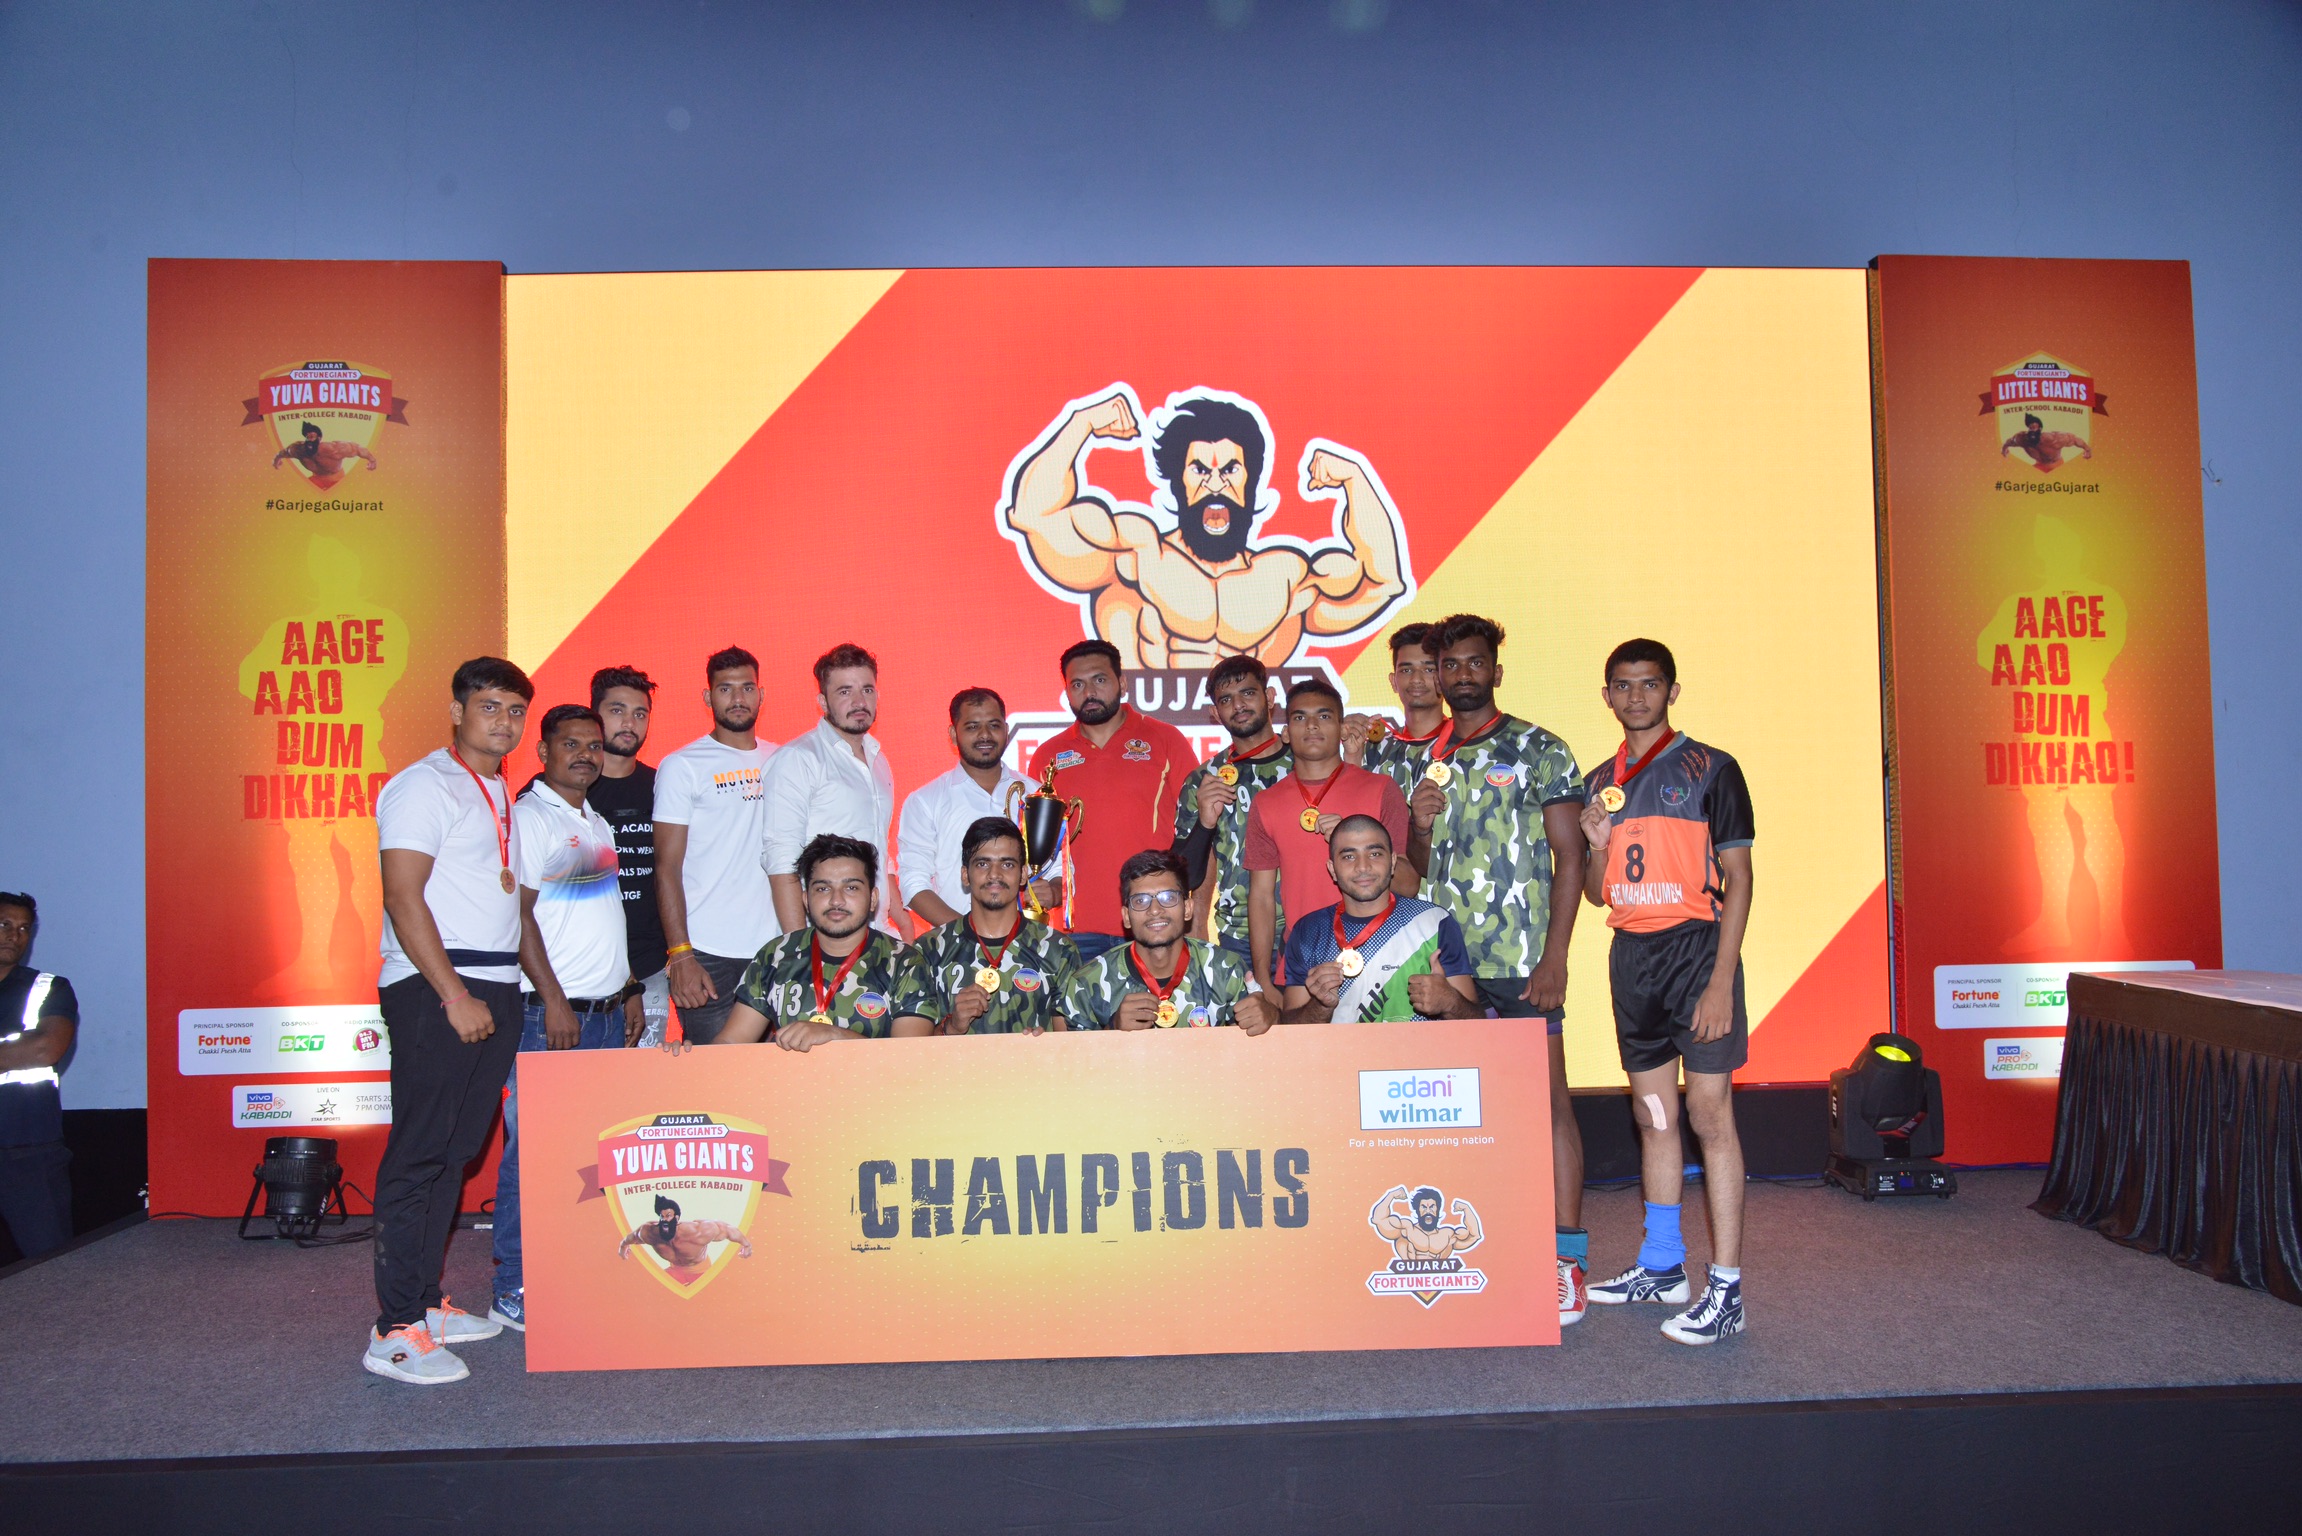 Surat teams lift Little, Yuva Giants kabaddi trophies